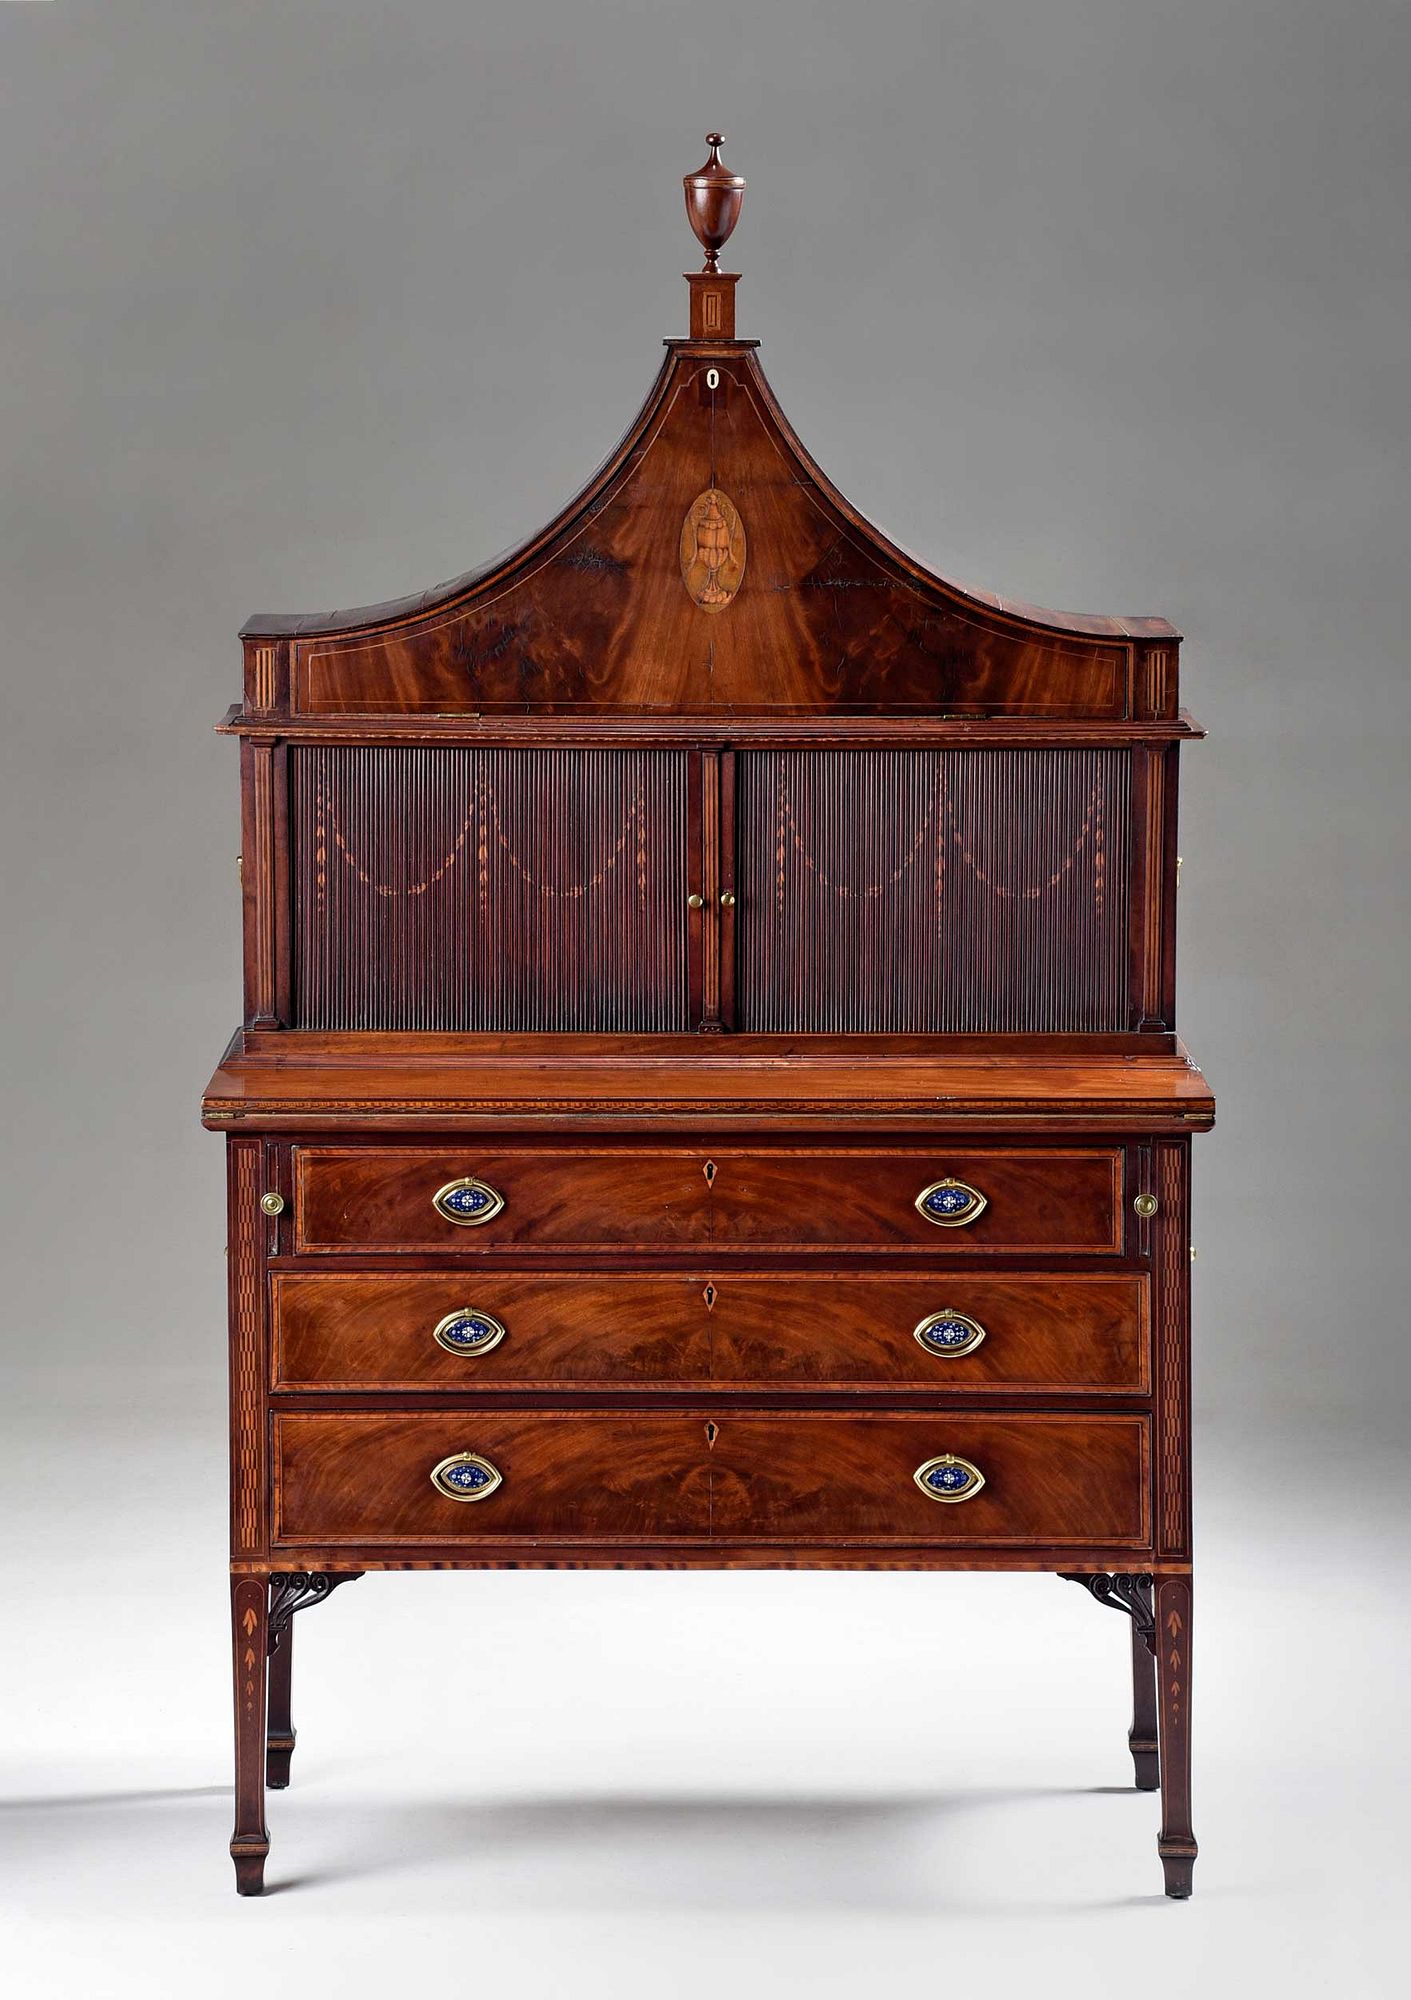 A Rare and Important Boston Federal Inlaid Mahogany Pedimented Tambour Desk